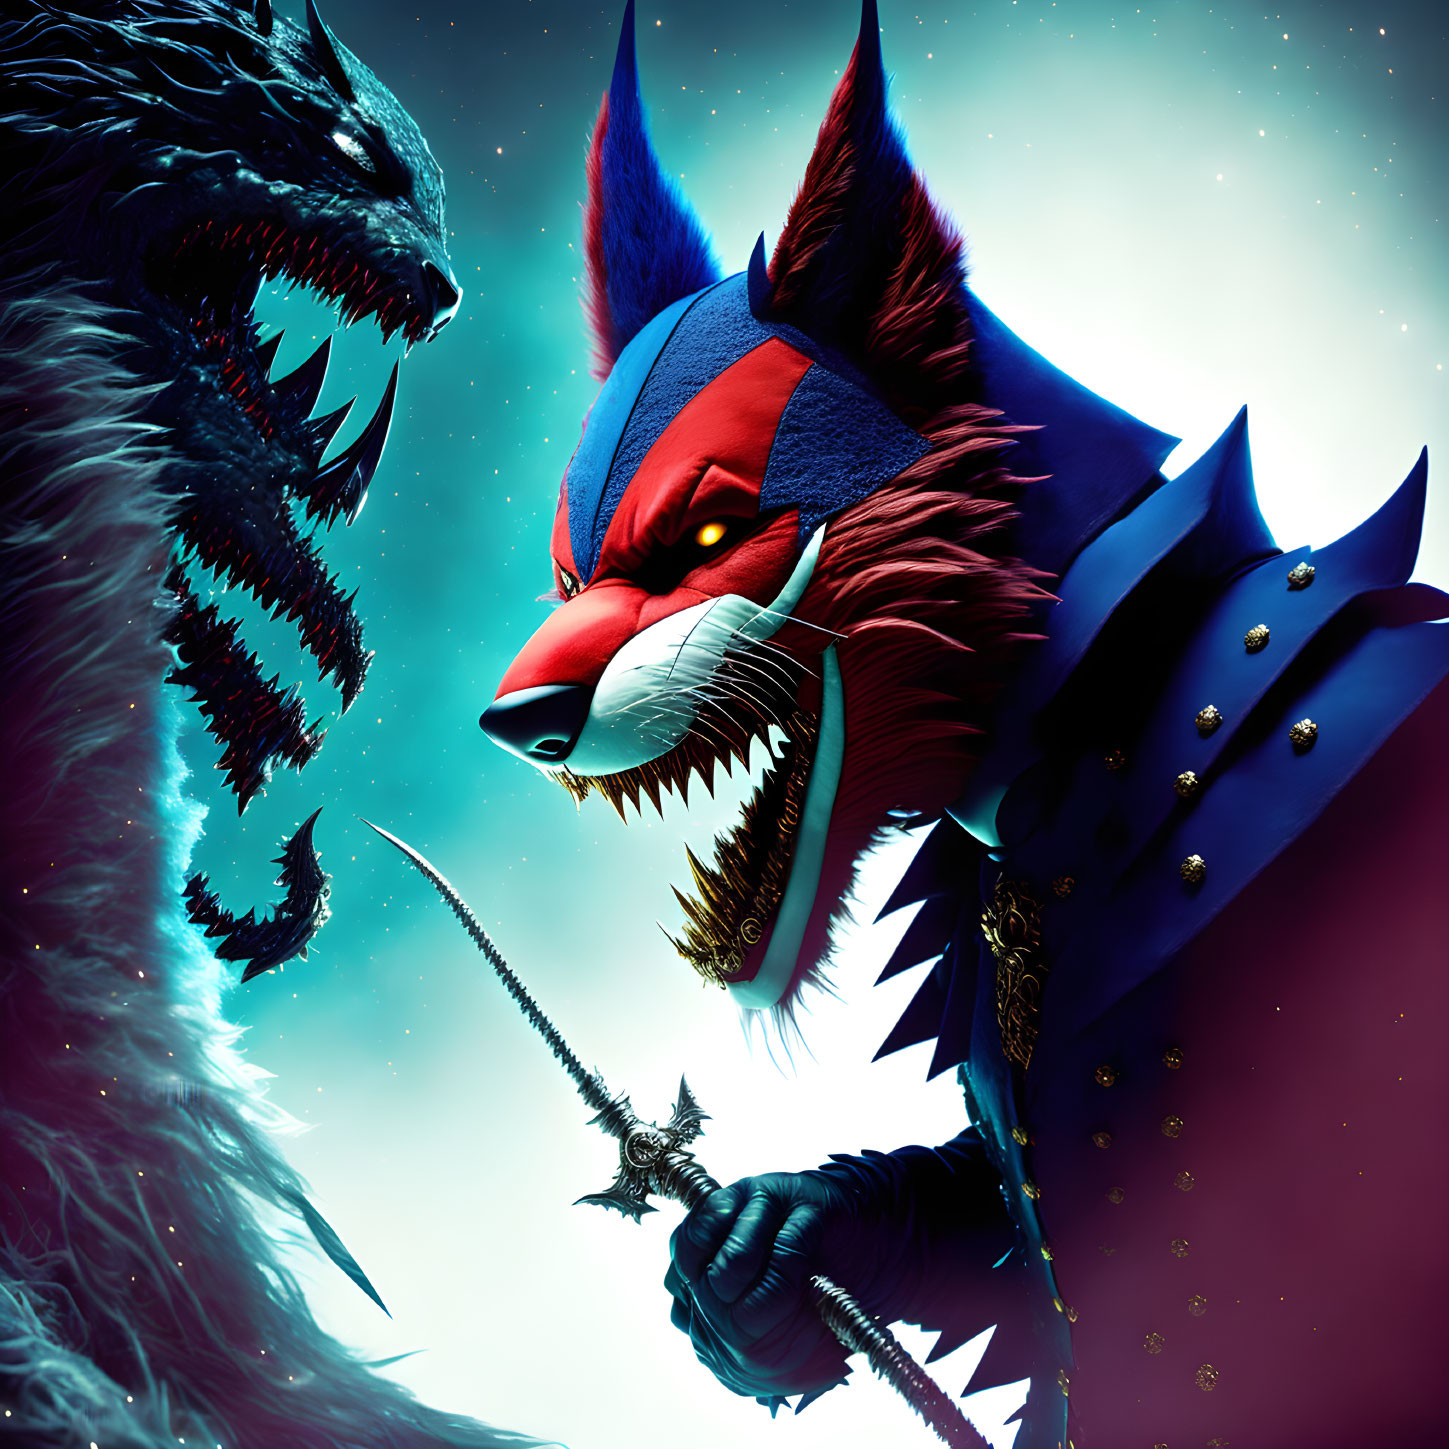 Illustration of fierce fox knight in armor vs. shadowy creature on cosmic backdrop